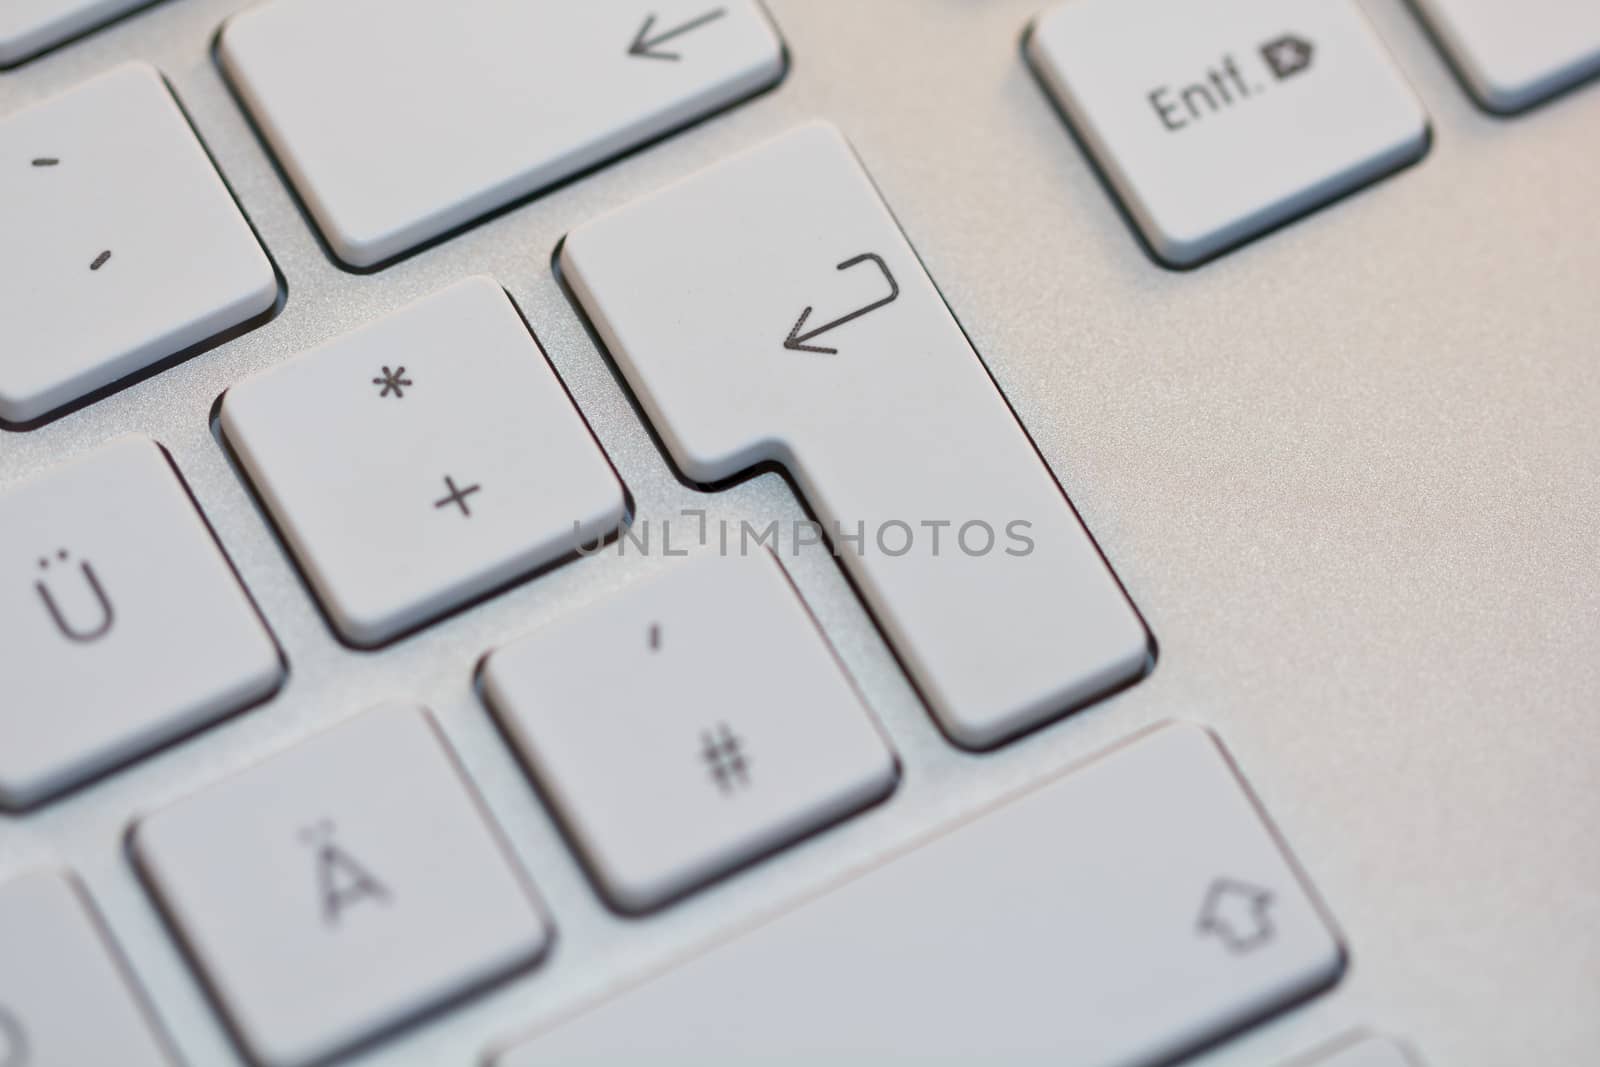 Keyboard closeup with enter key